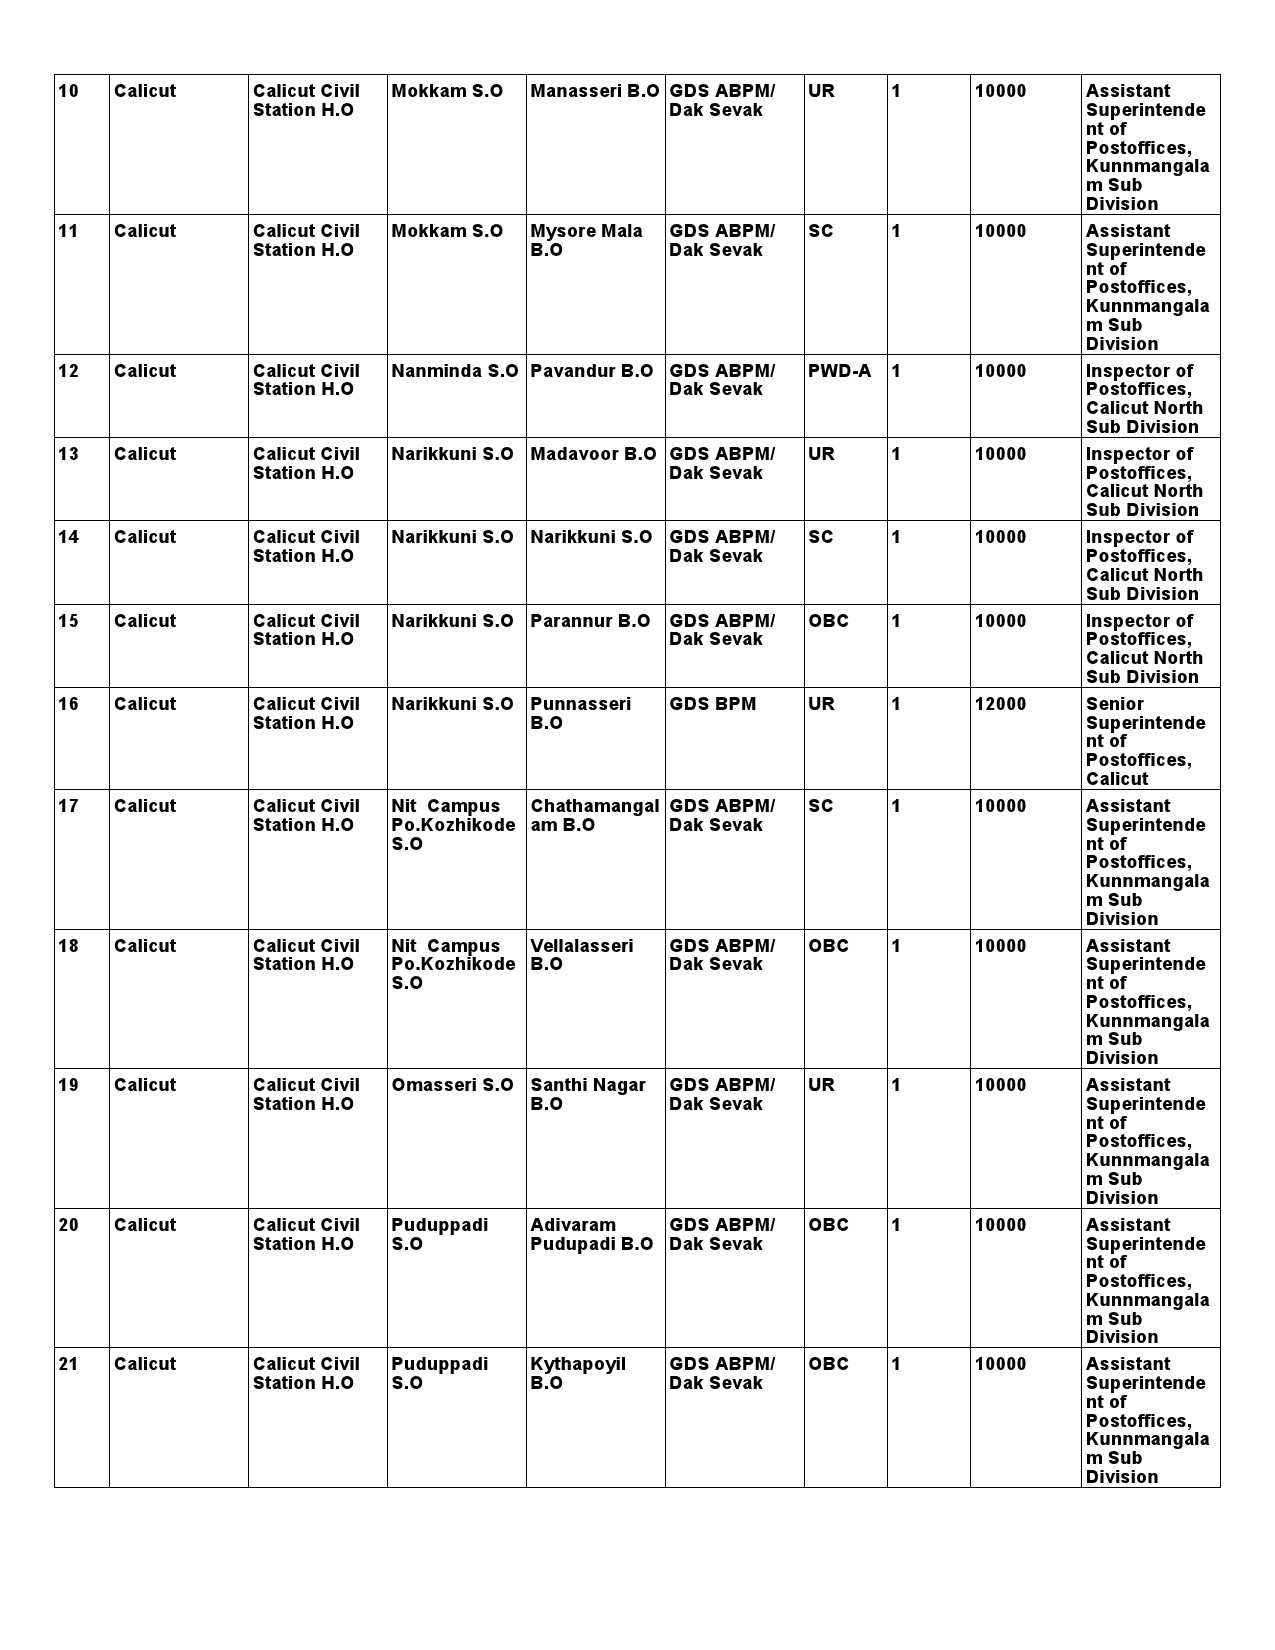 Kerala Postal Circle GDS Recruitment 2021 notification - Notification Image 16